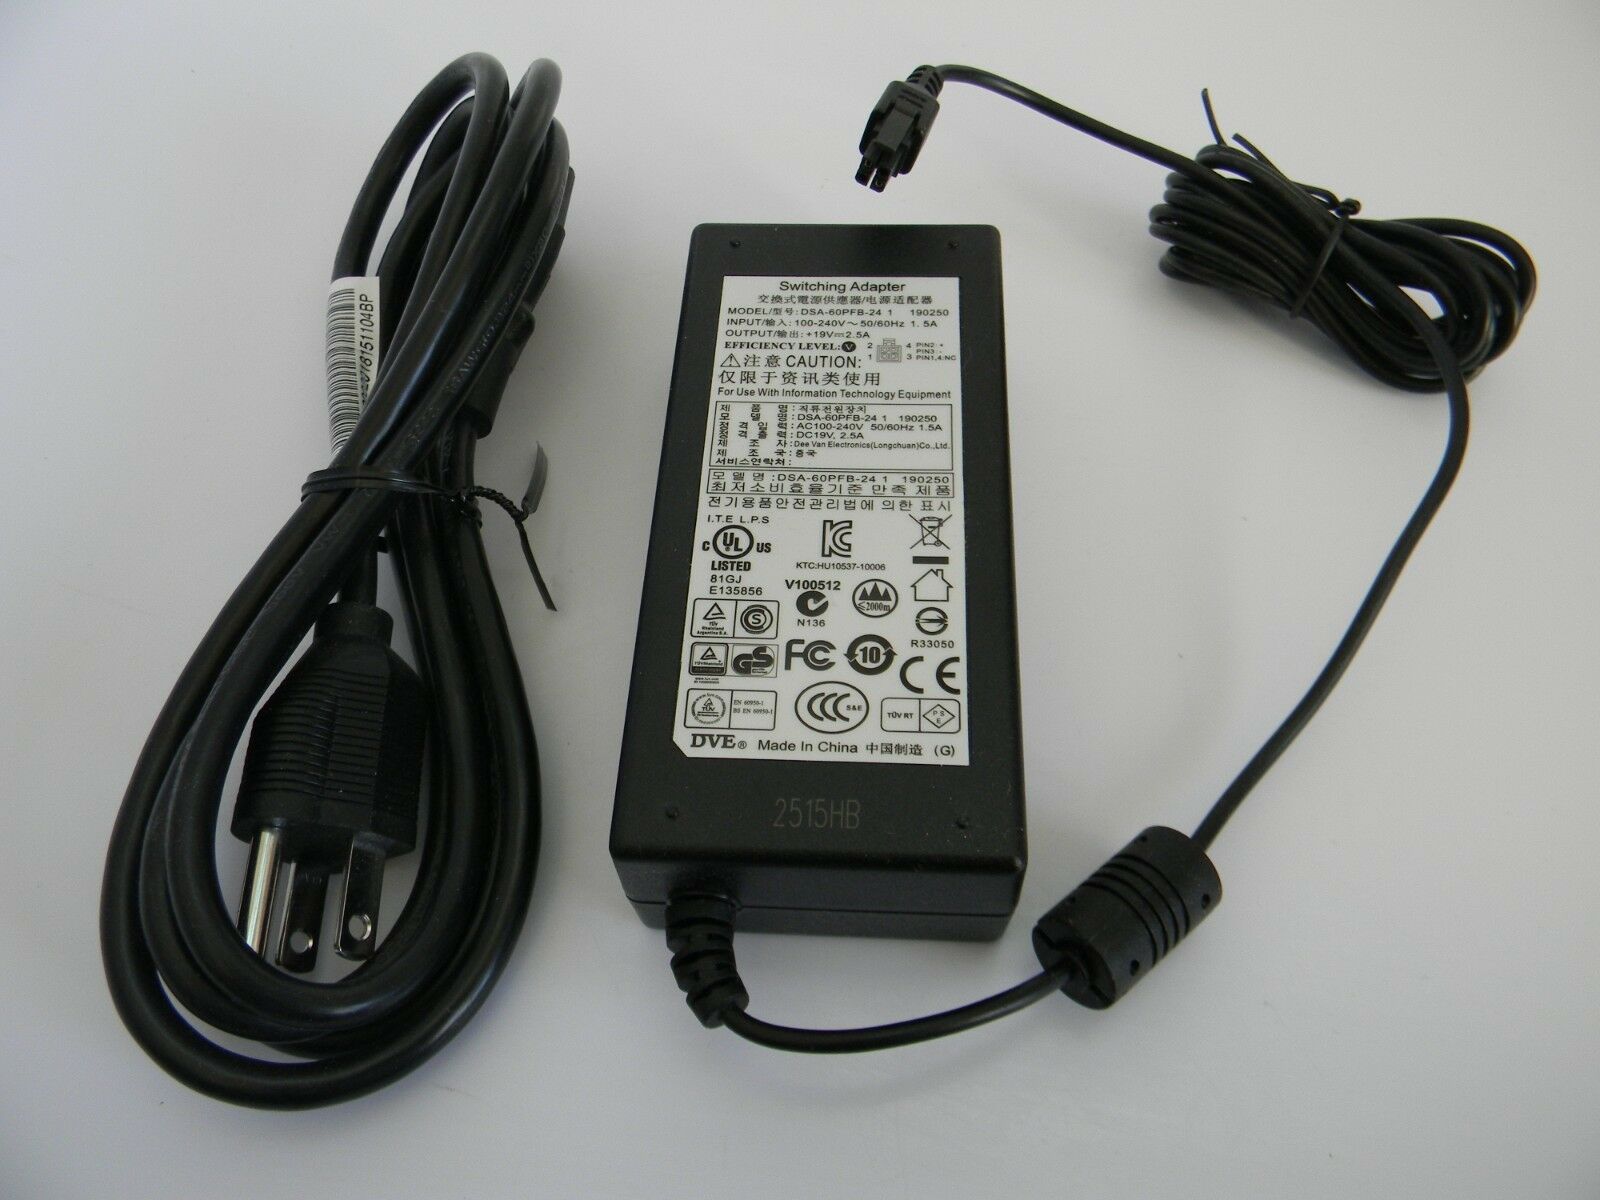 New DVE Switching Adapter DSA-60PFB-24 1 190250 DC Output 19V, 2.5A w / Cord Model: DSA – 60PFB – 24 1 240250 Type: